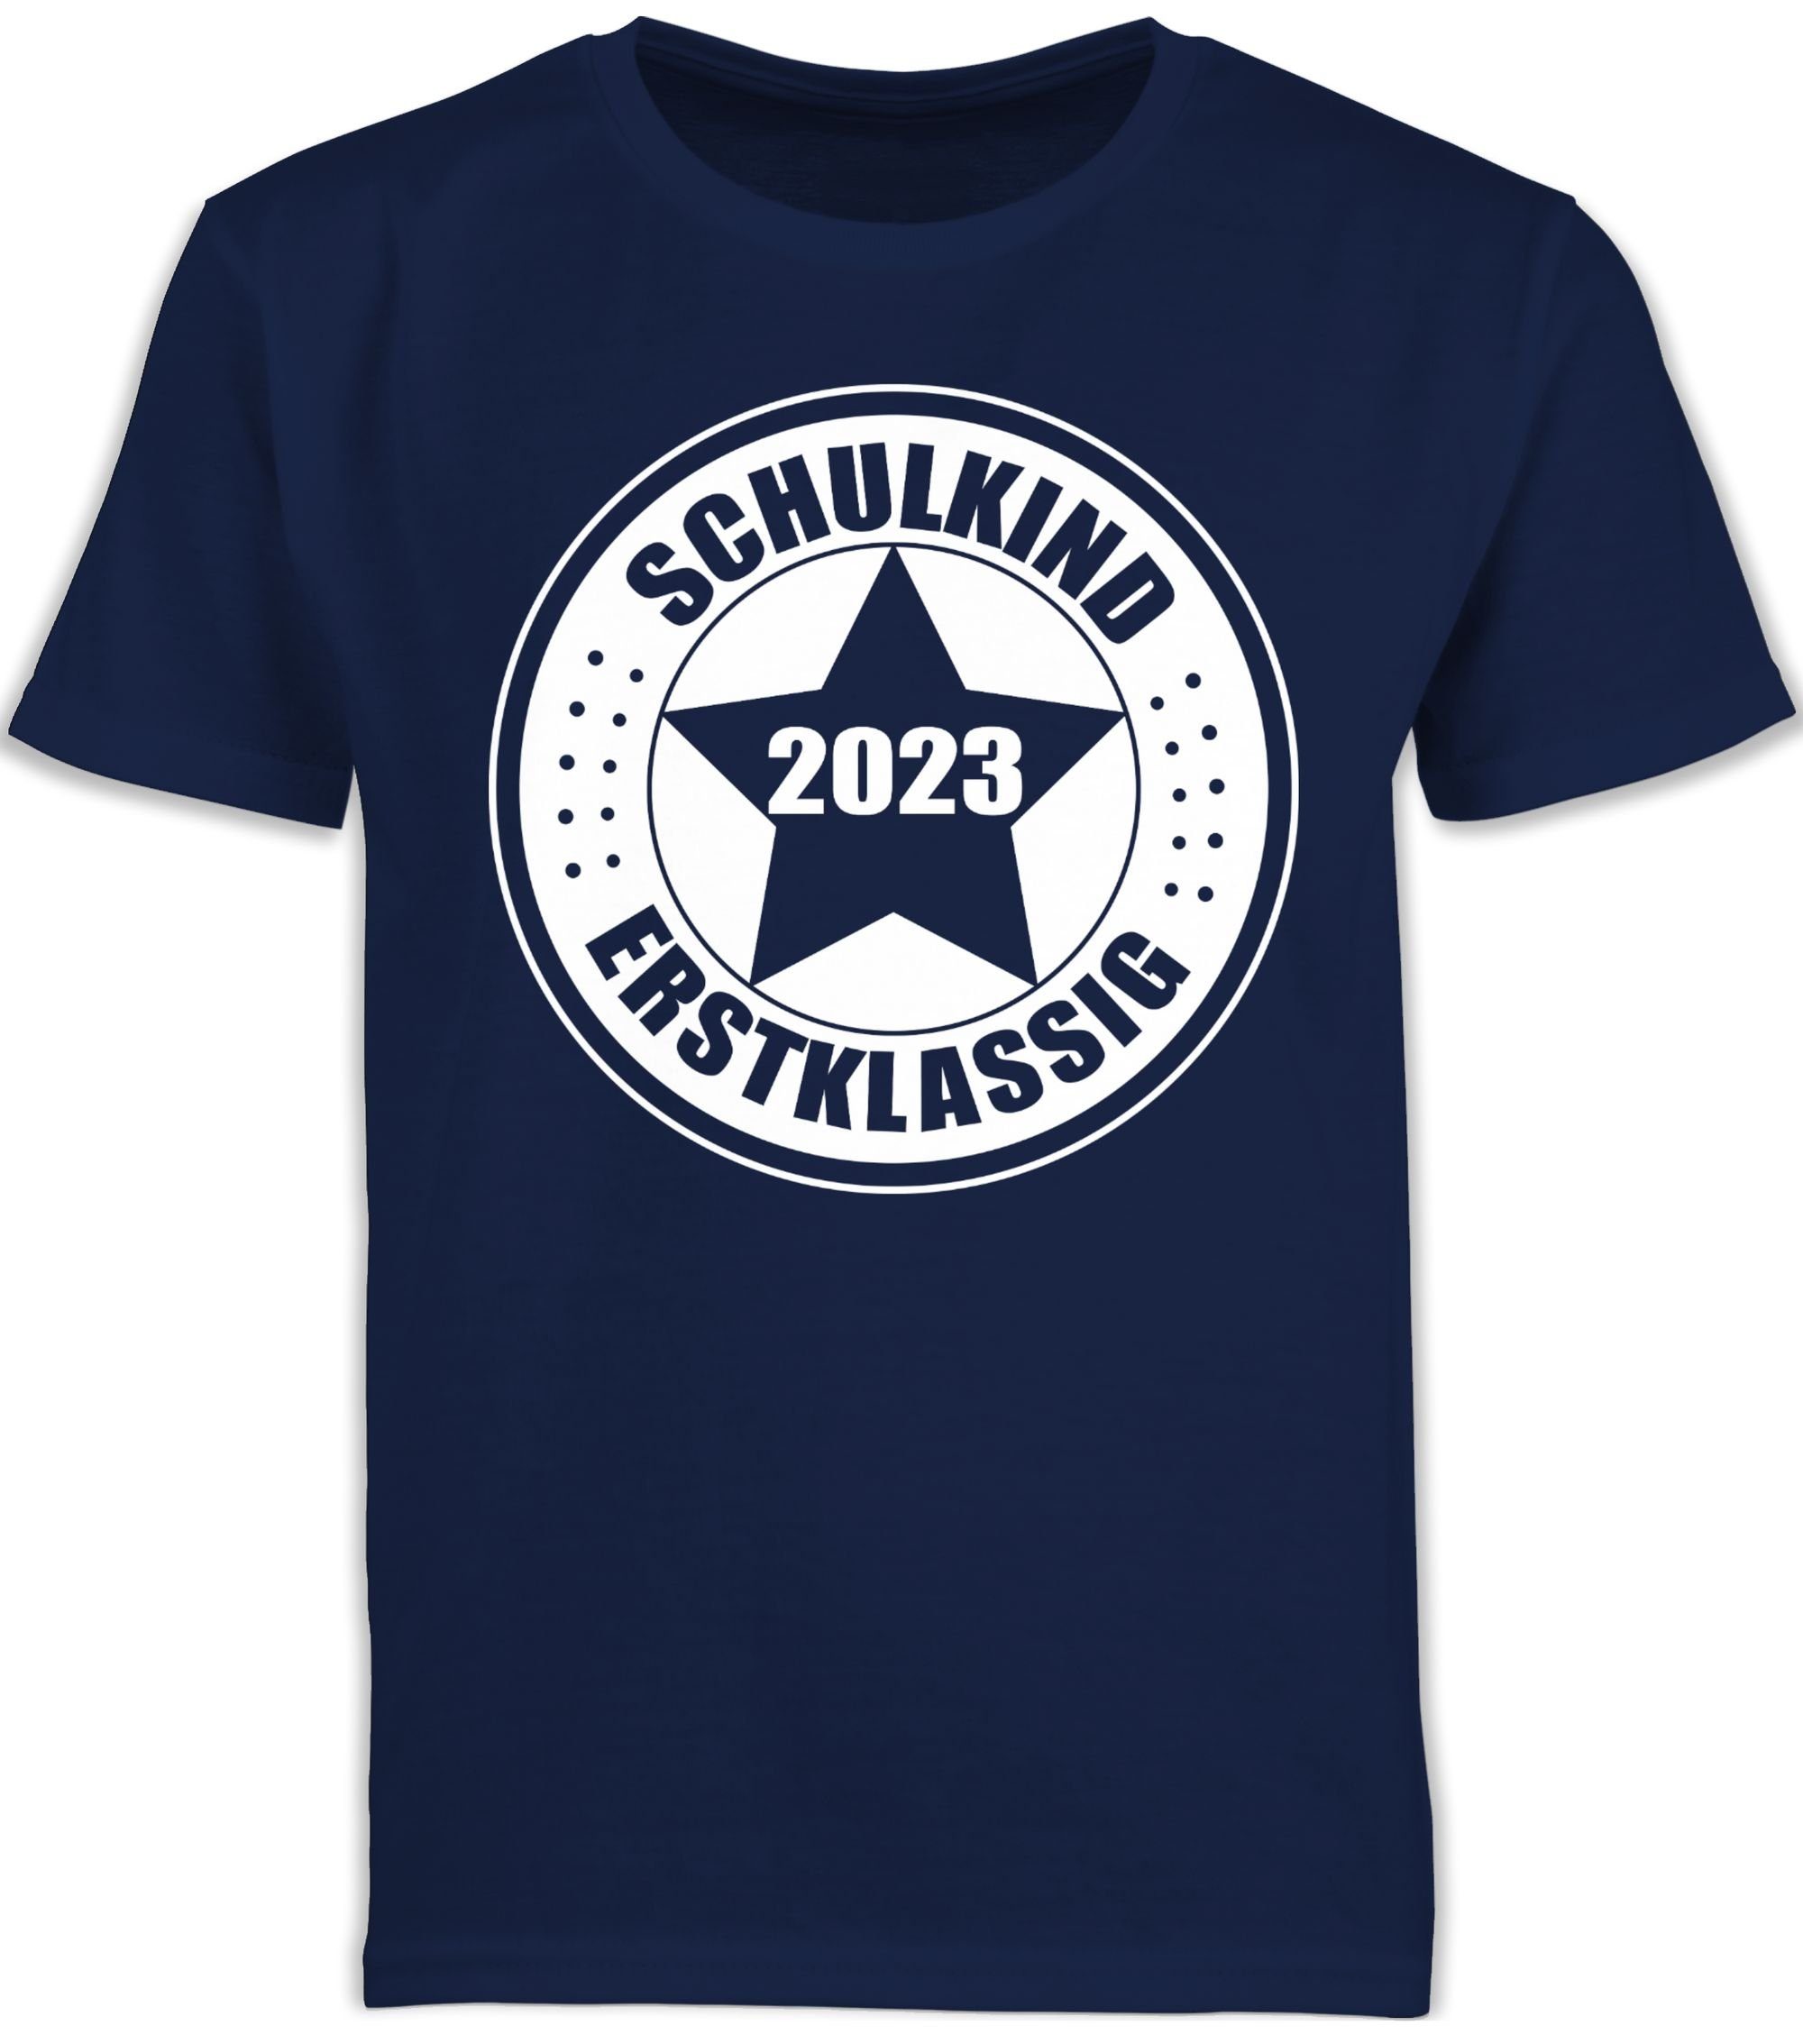 Shirtracer T-Shirt Schulkind 2023 - Erstklassig Einschulung Junge Schulanfang Geschenke 1 Navy Blau